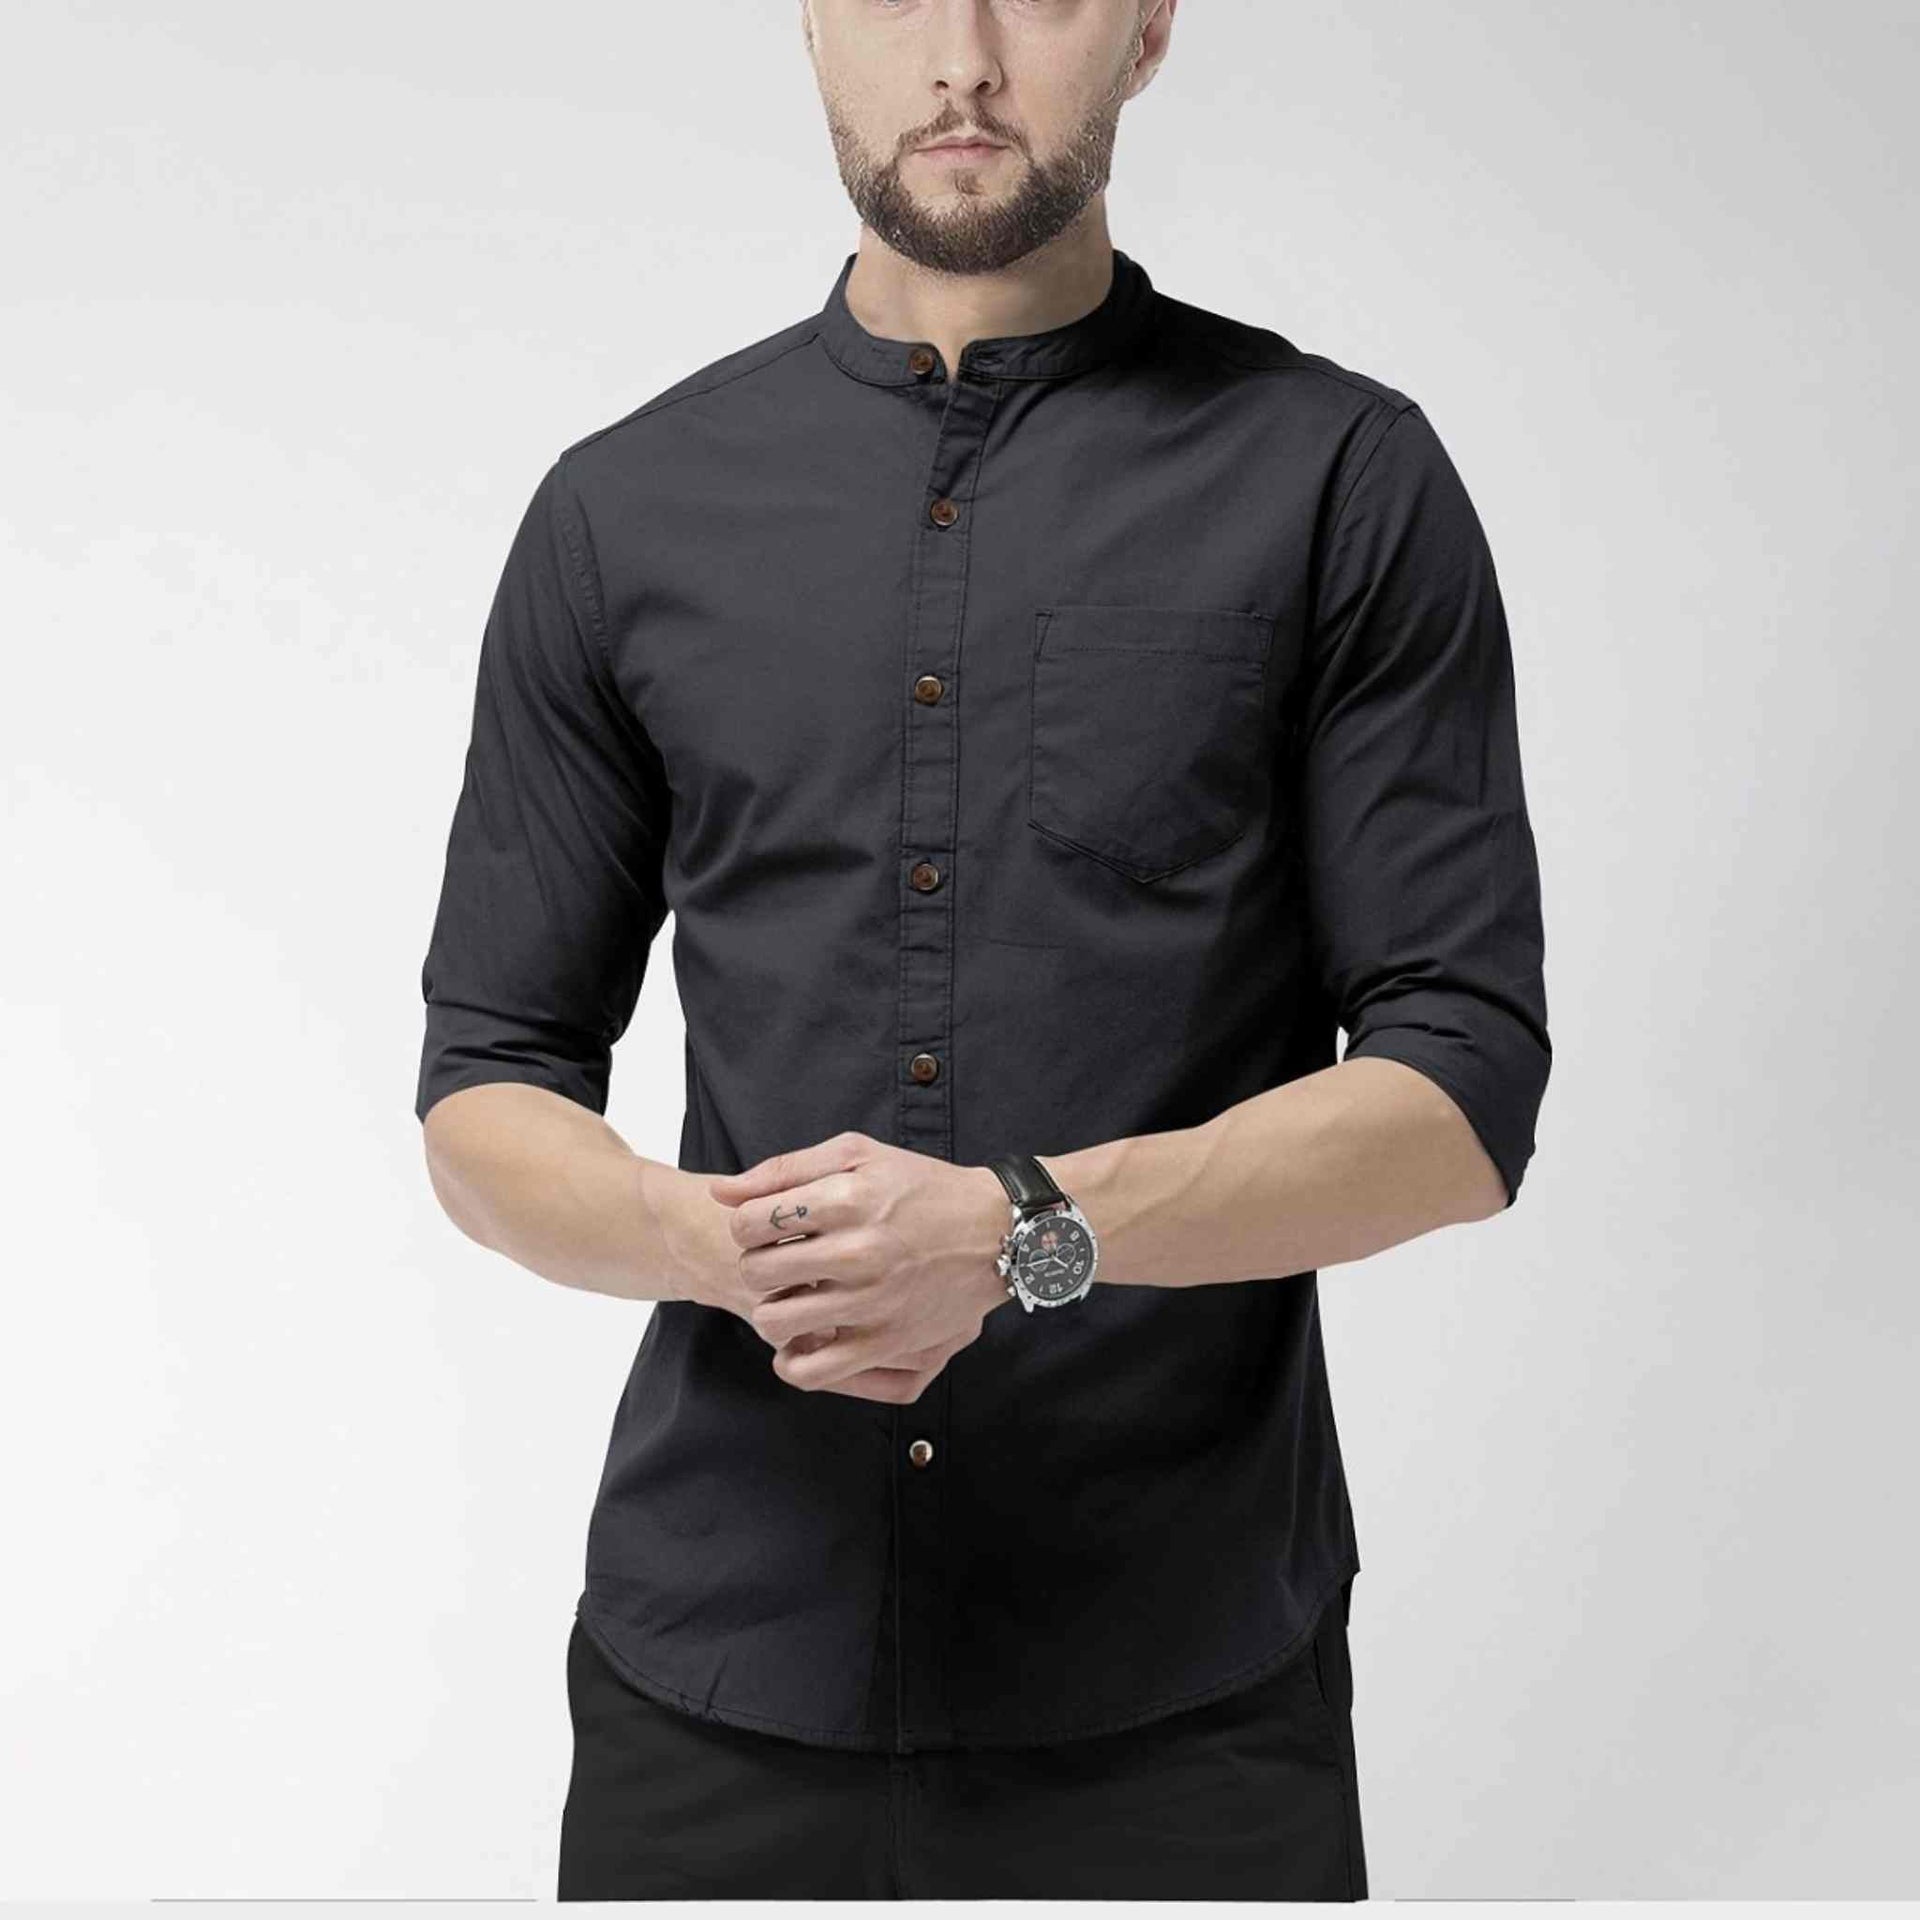 Hemploom - Elegant Hemp & Cotton Shirt in Black - CBD Store India